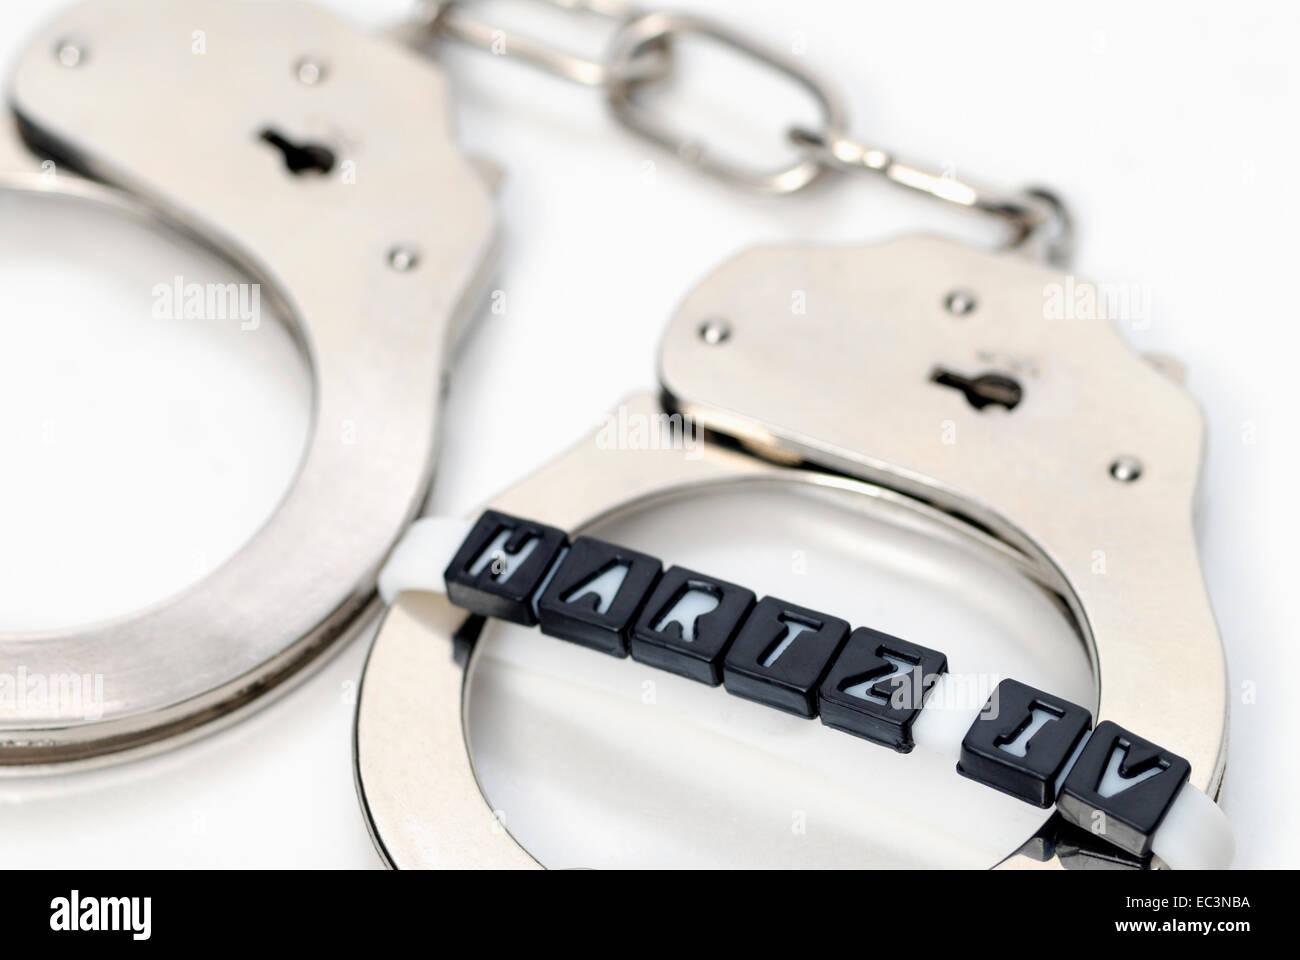 Handcuffs with label Hartz IV, German unemployment benefit Stock Photo